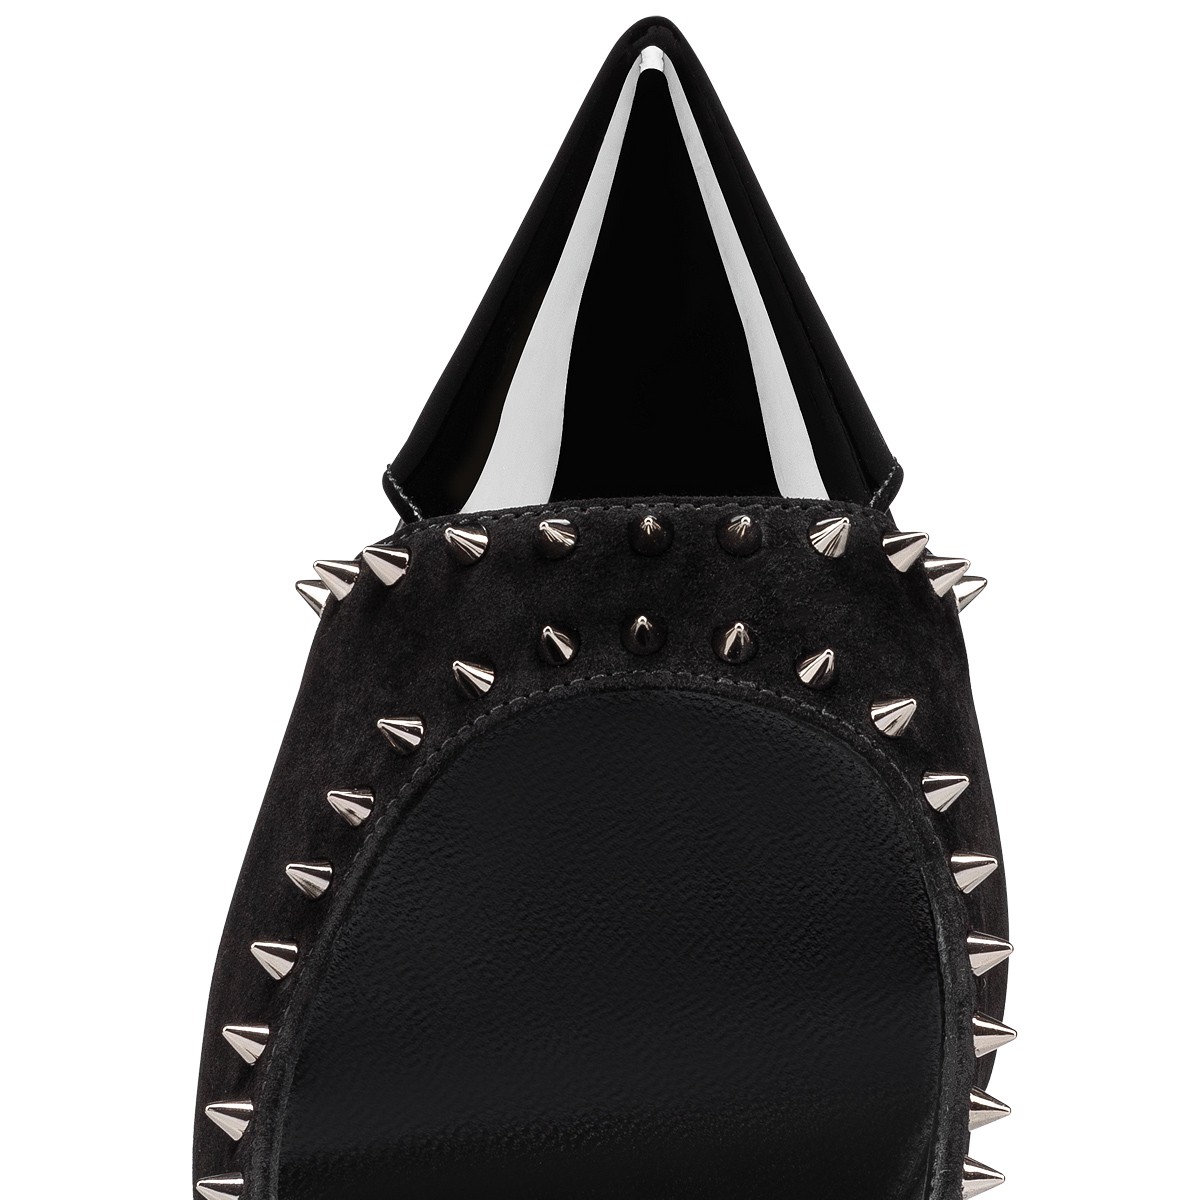 Duvette Spikes 100 Black Patent leather - Women Shoes - Christian Louboutin